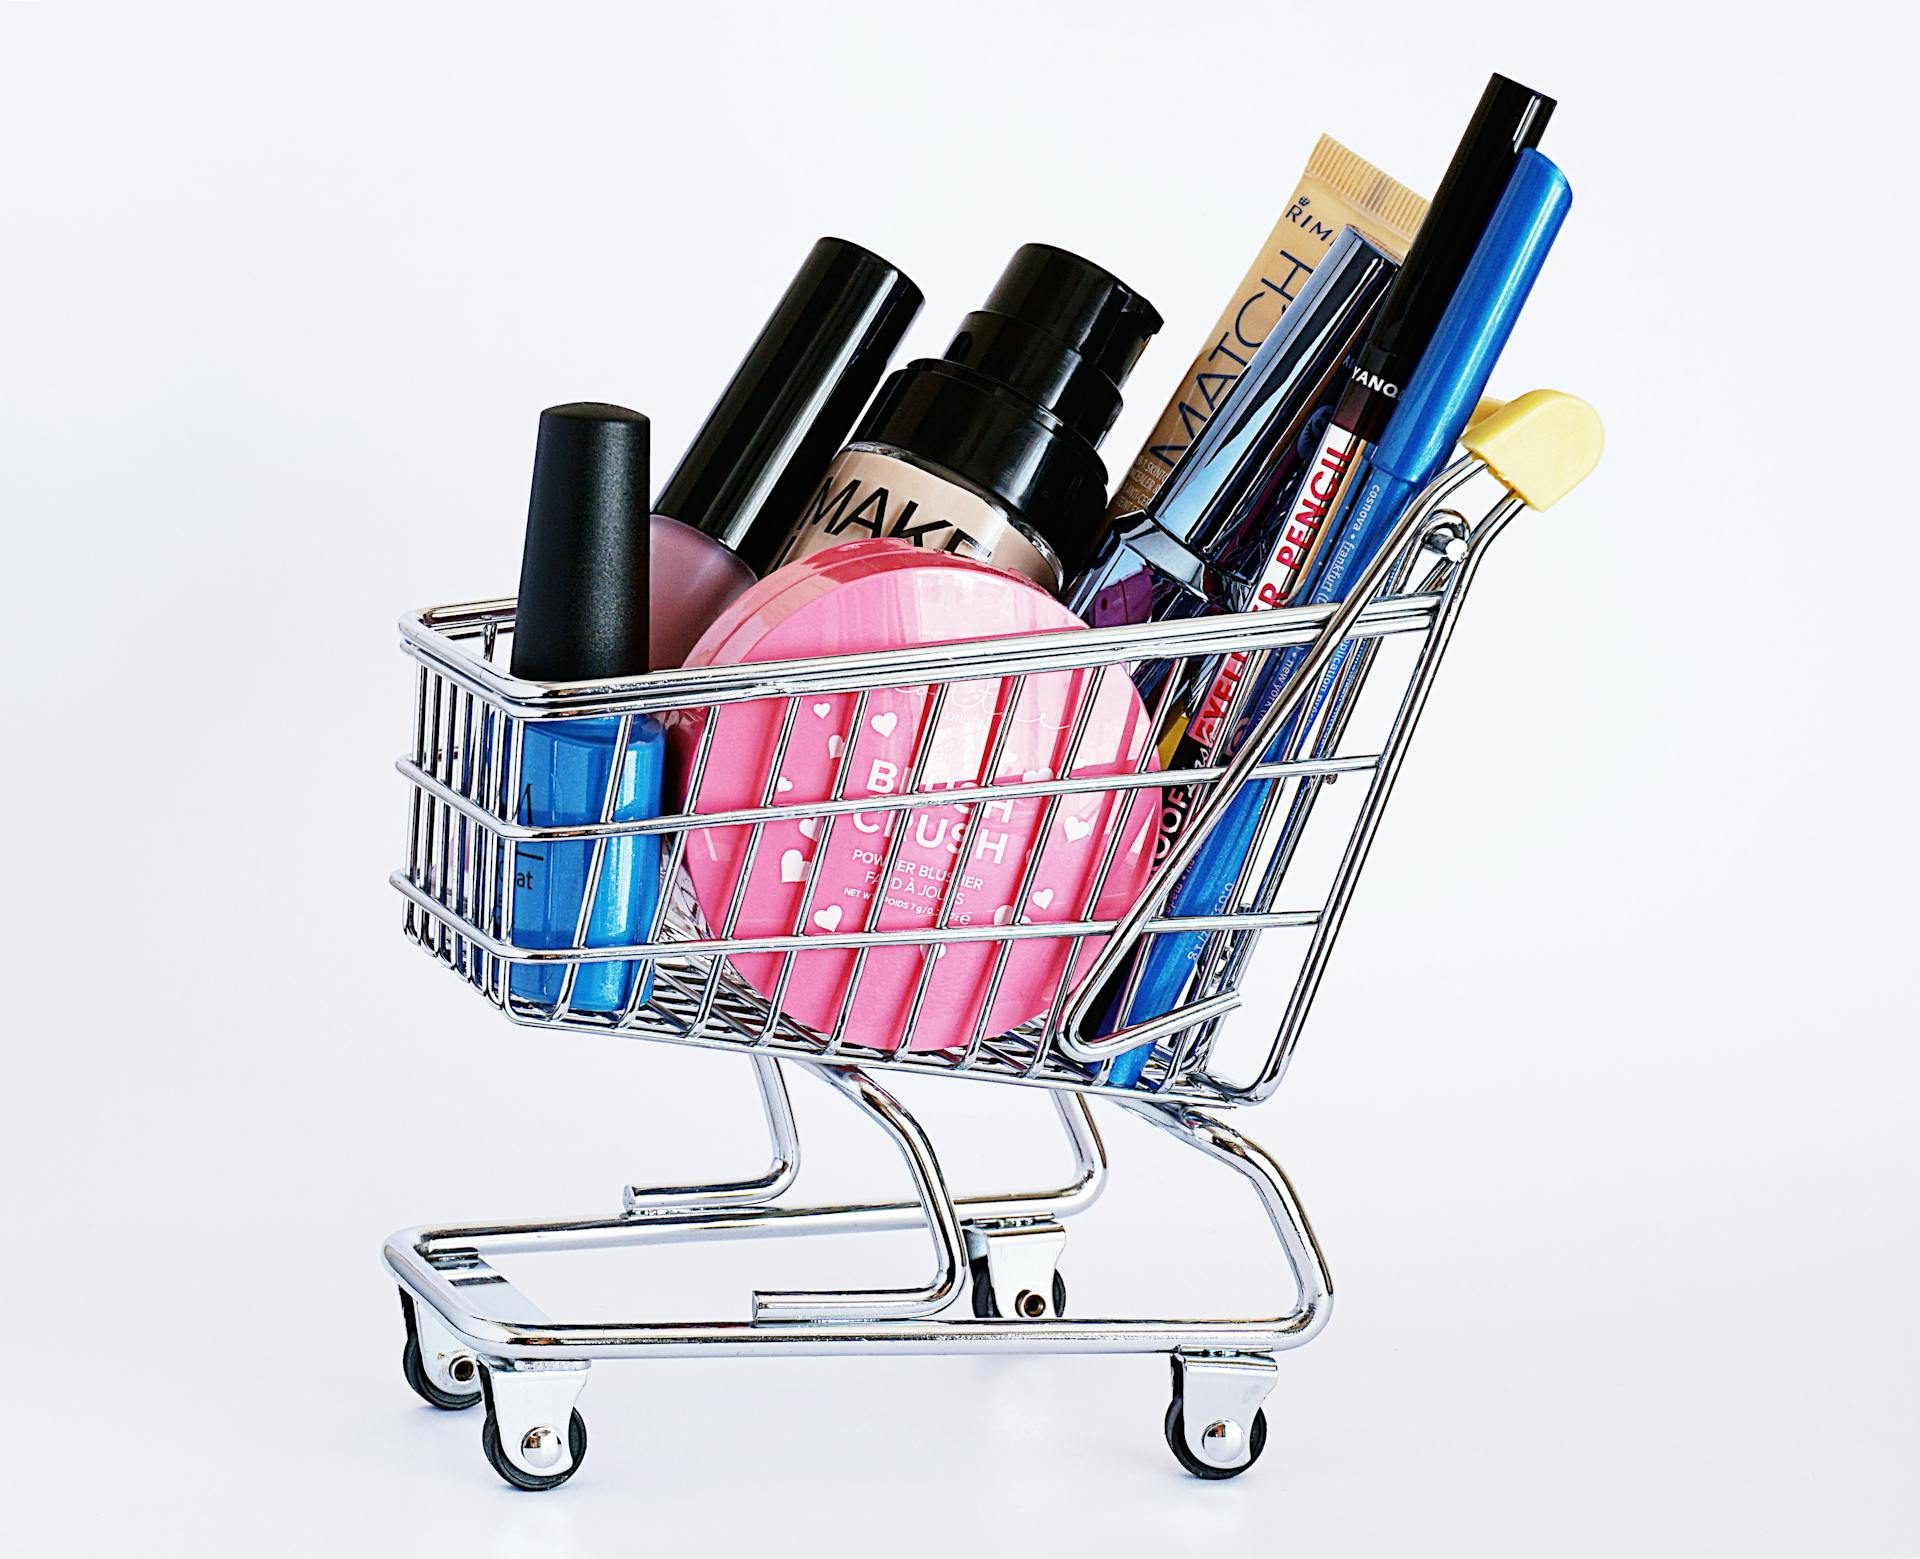 Productos de maquillaje en un mini carrito de la compra | Fuente: Pexels